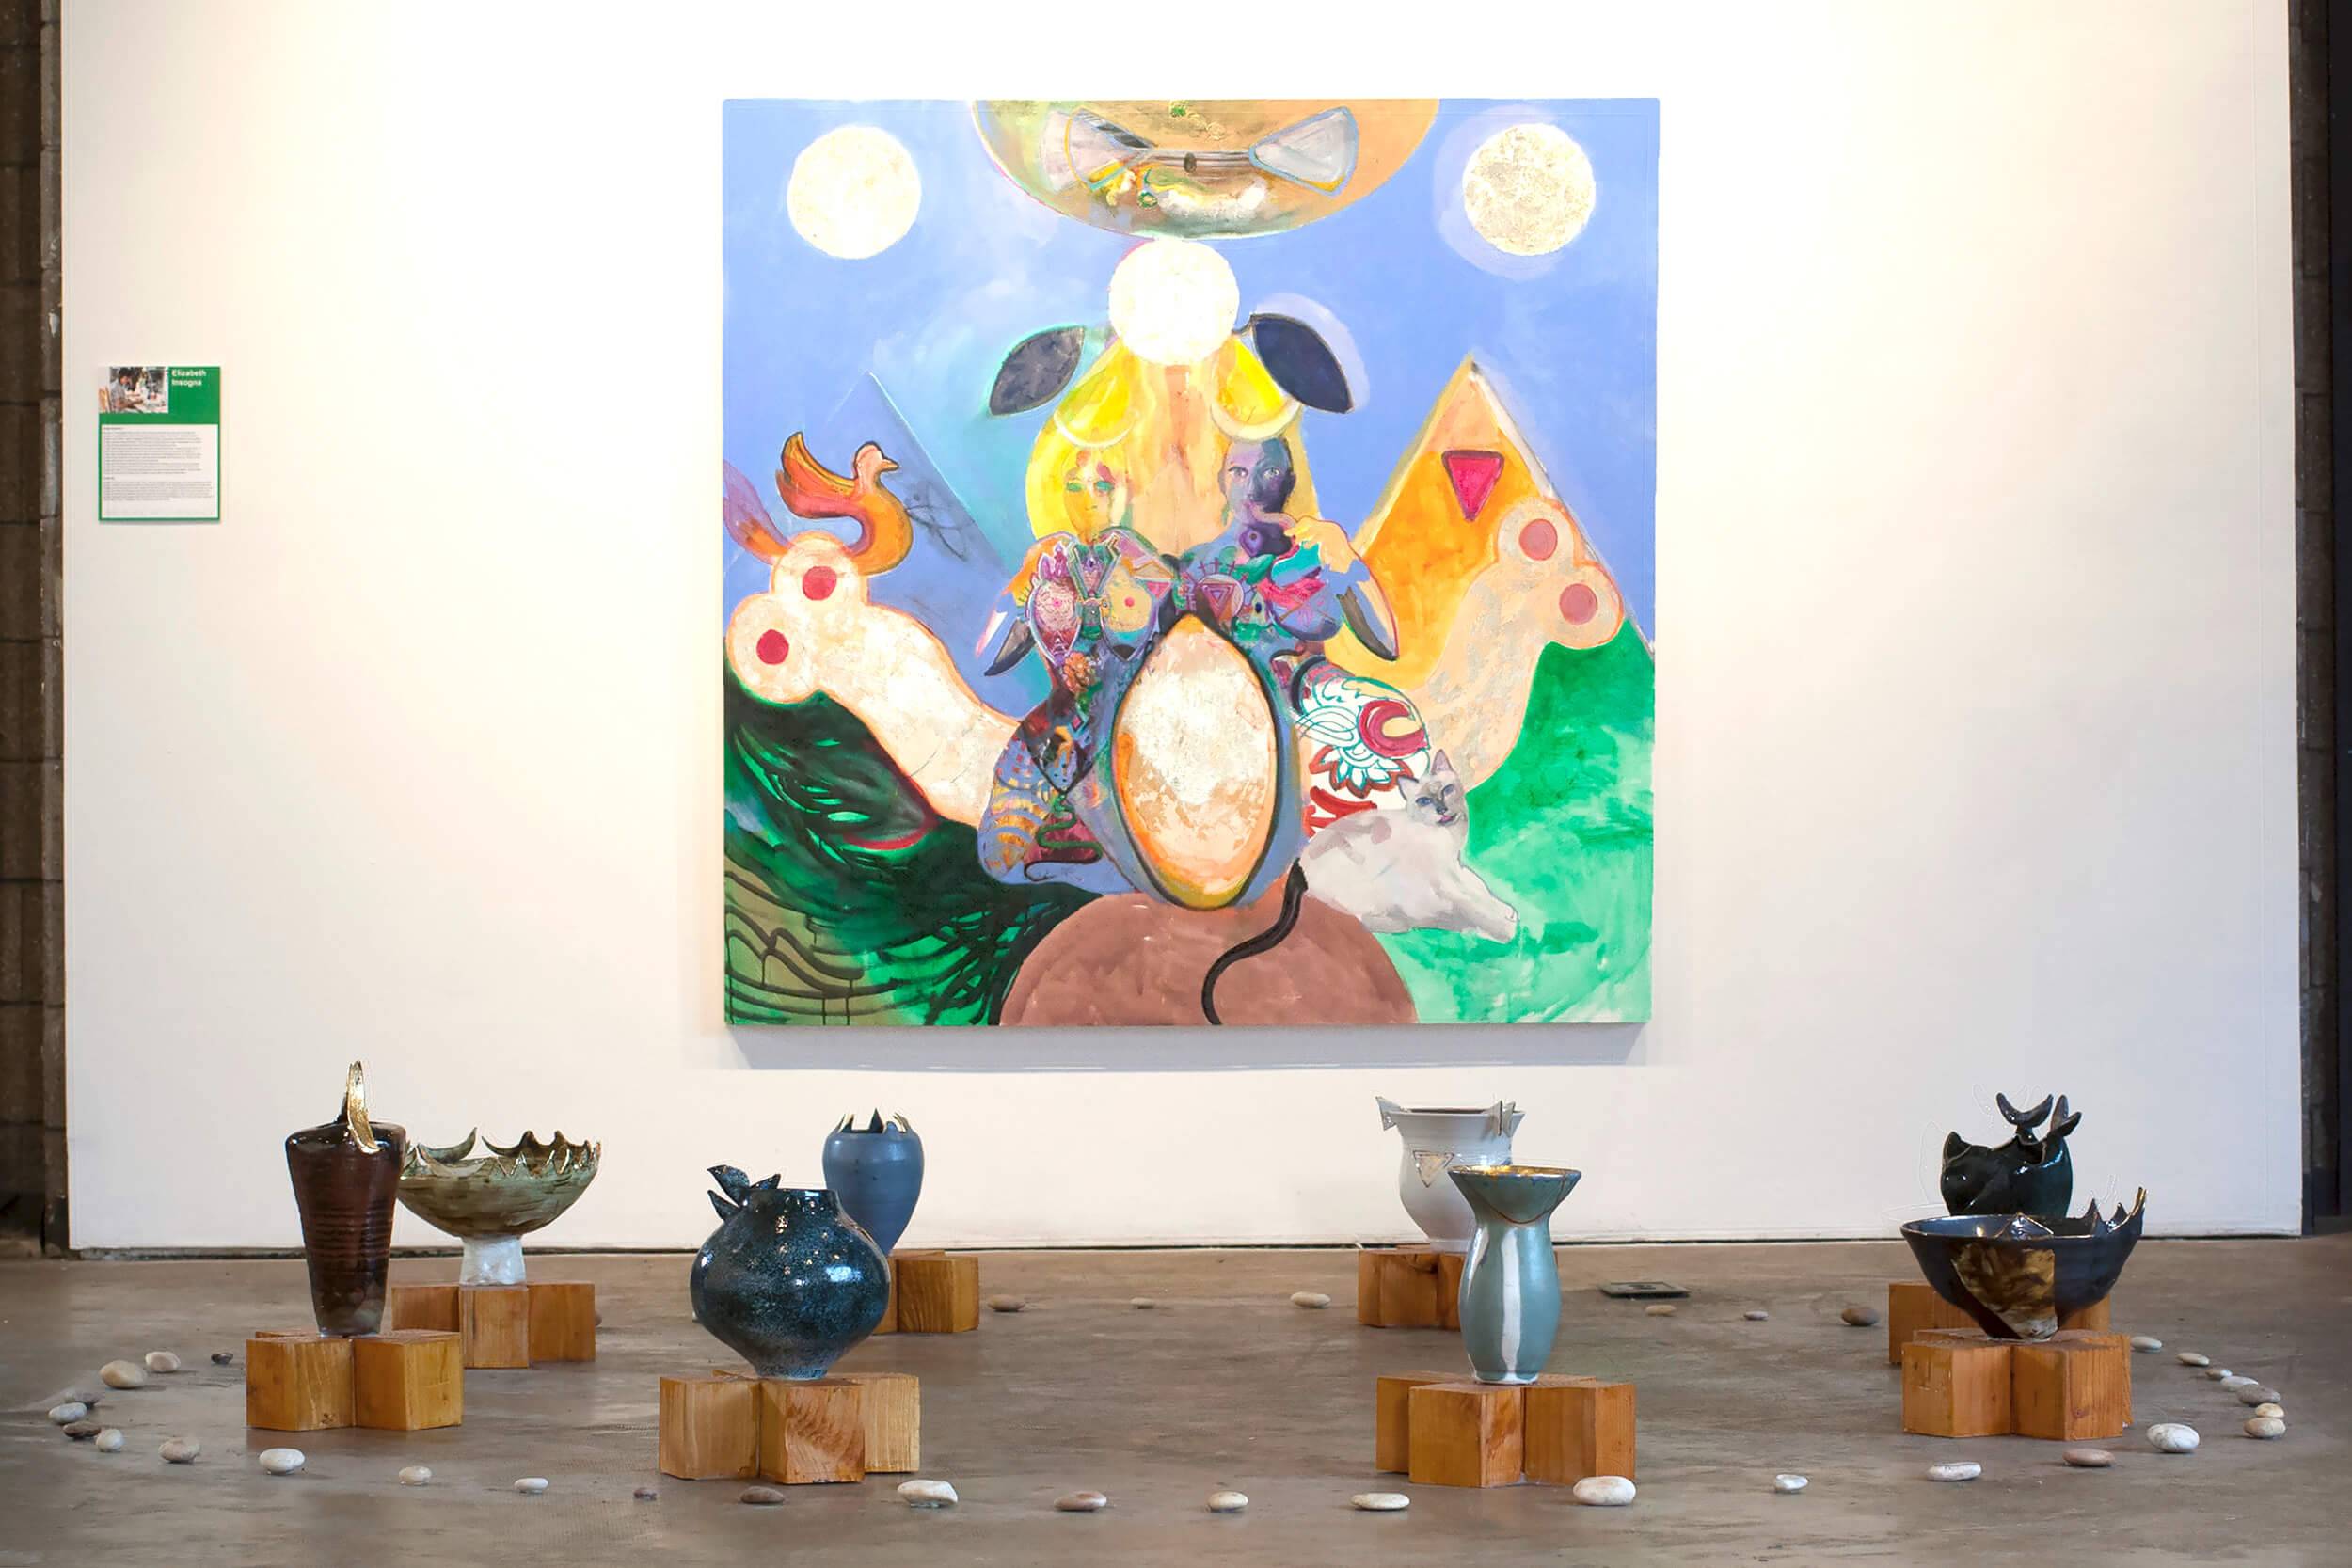 Elizabeth Insogna Art - "Untitled and Circle of Cauldrons"